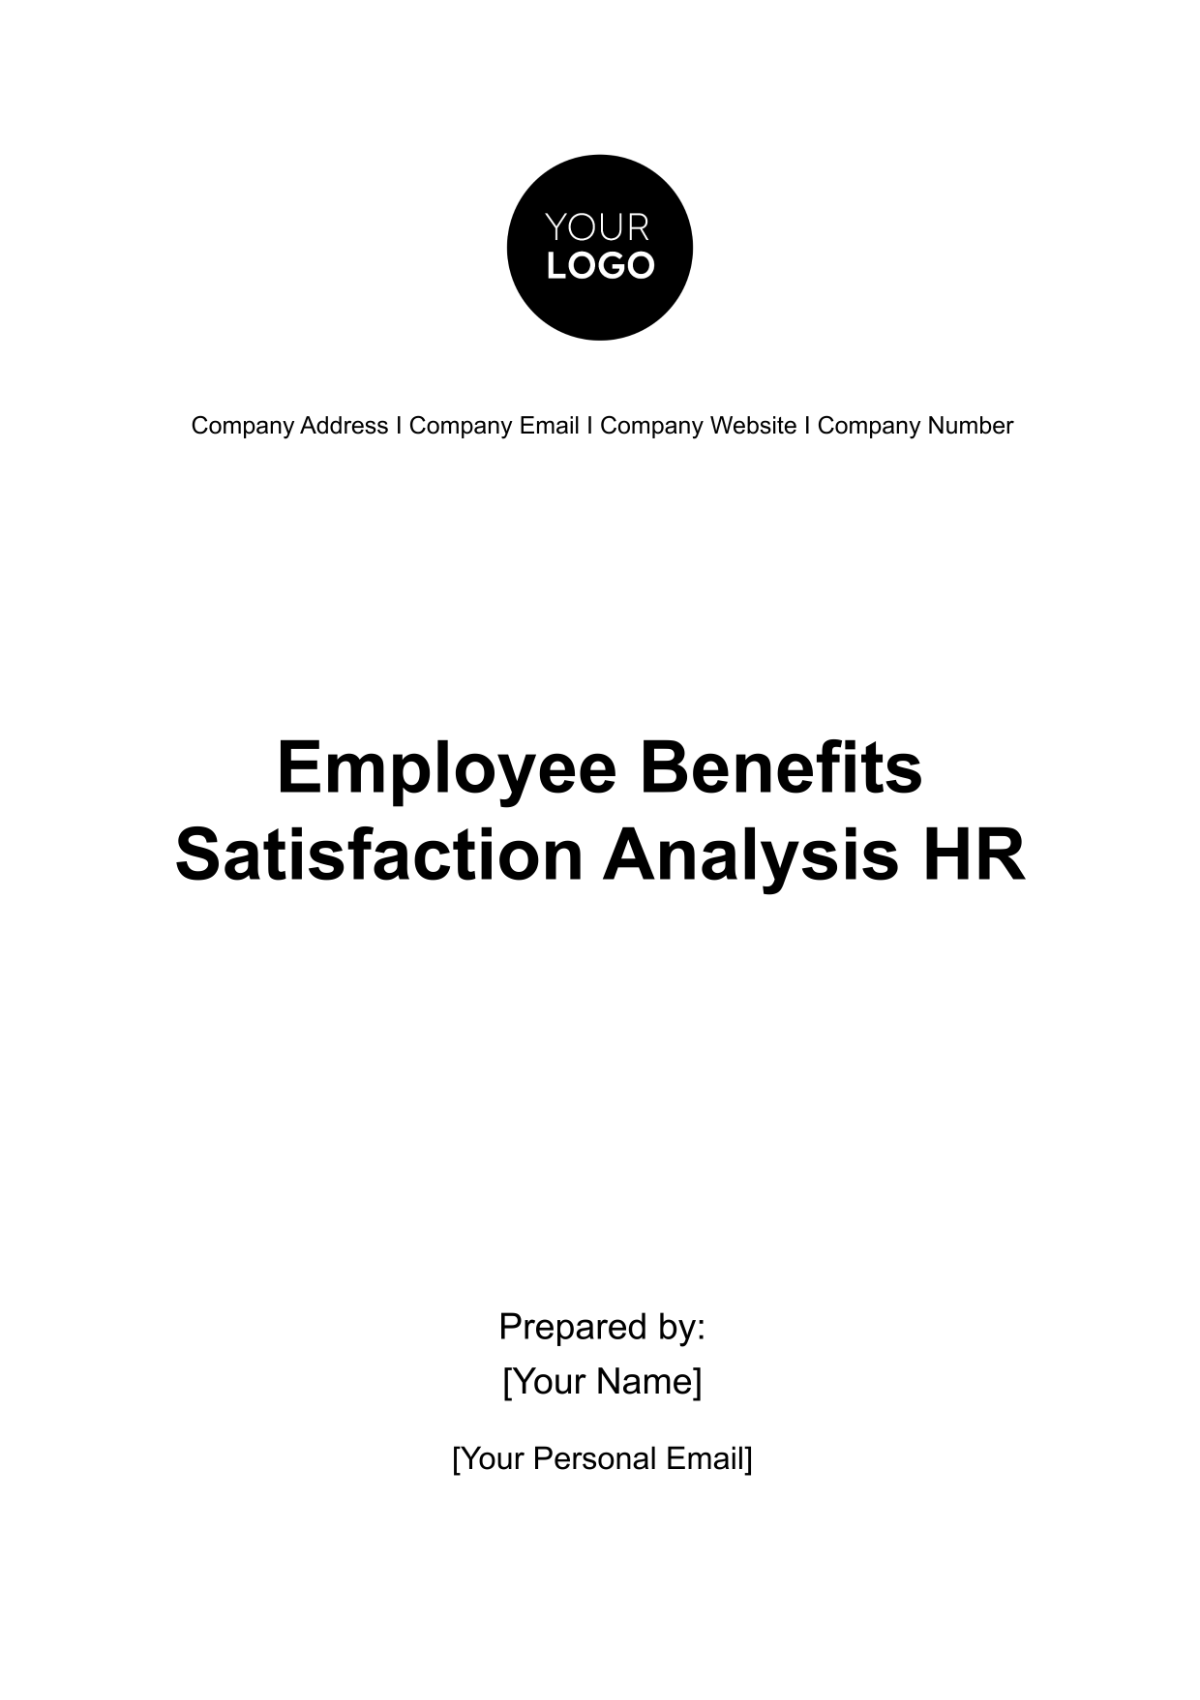 Free Employee Benefits Satisfaction Analysis HR Template